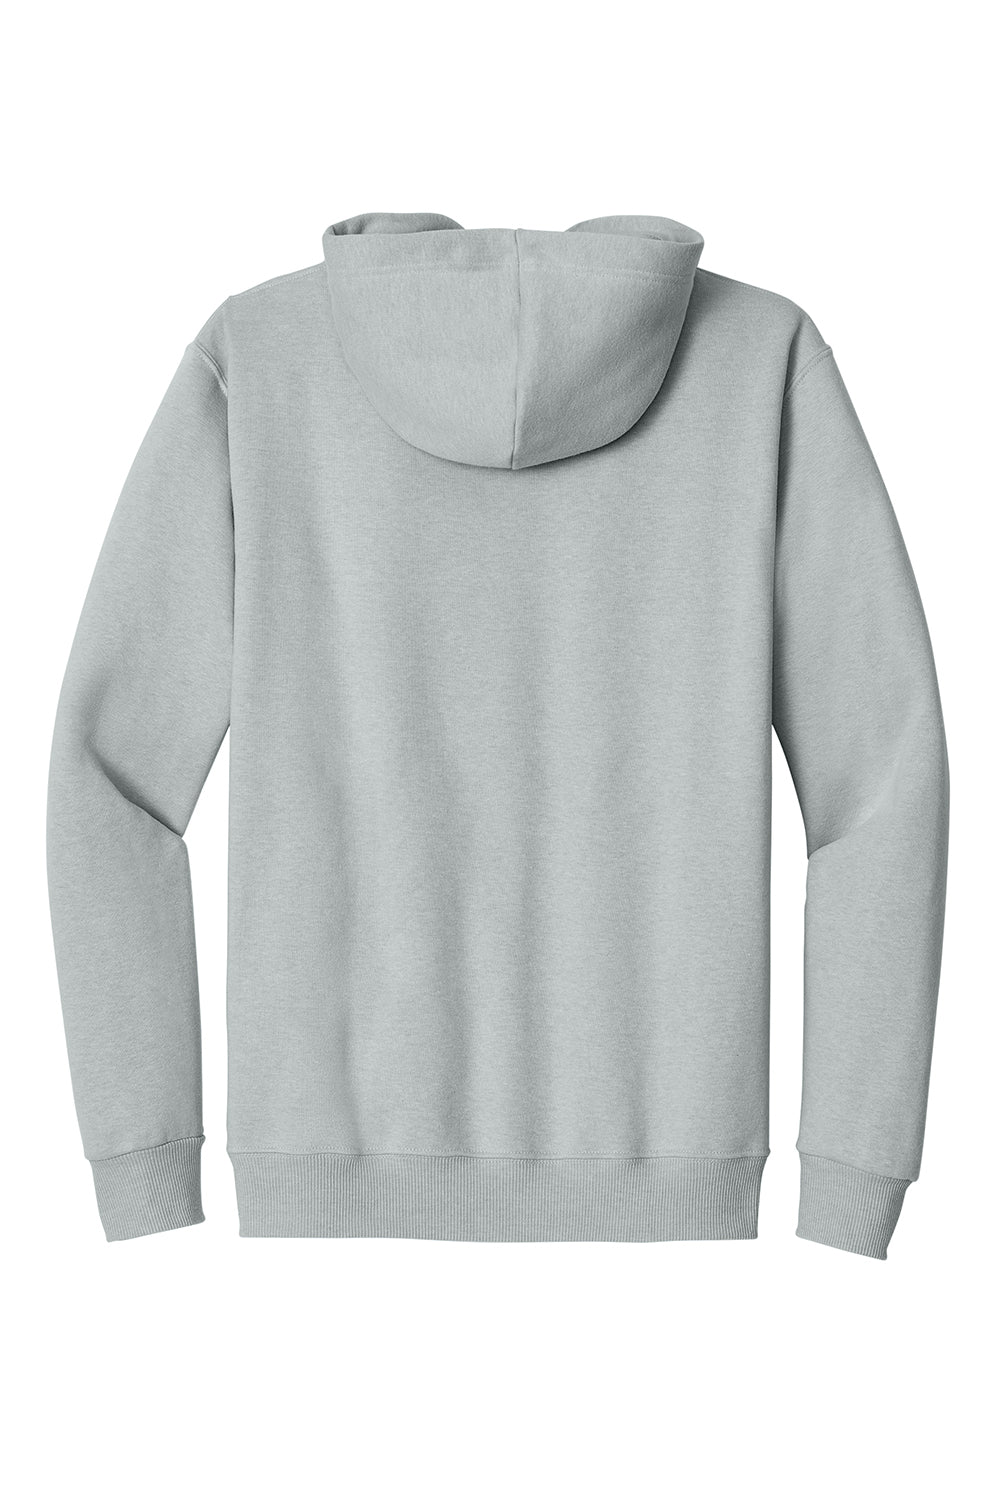 Jerzees 700M Mens Eco Premium Hooded Sweatshirt Hoodie Heather Frost Grey Flat Back